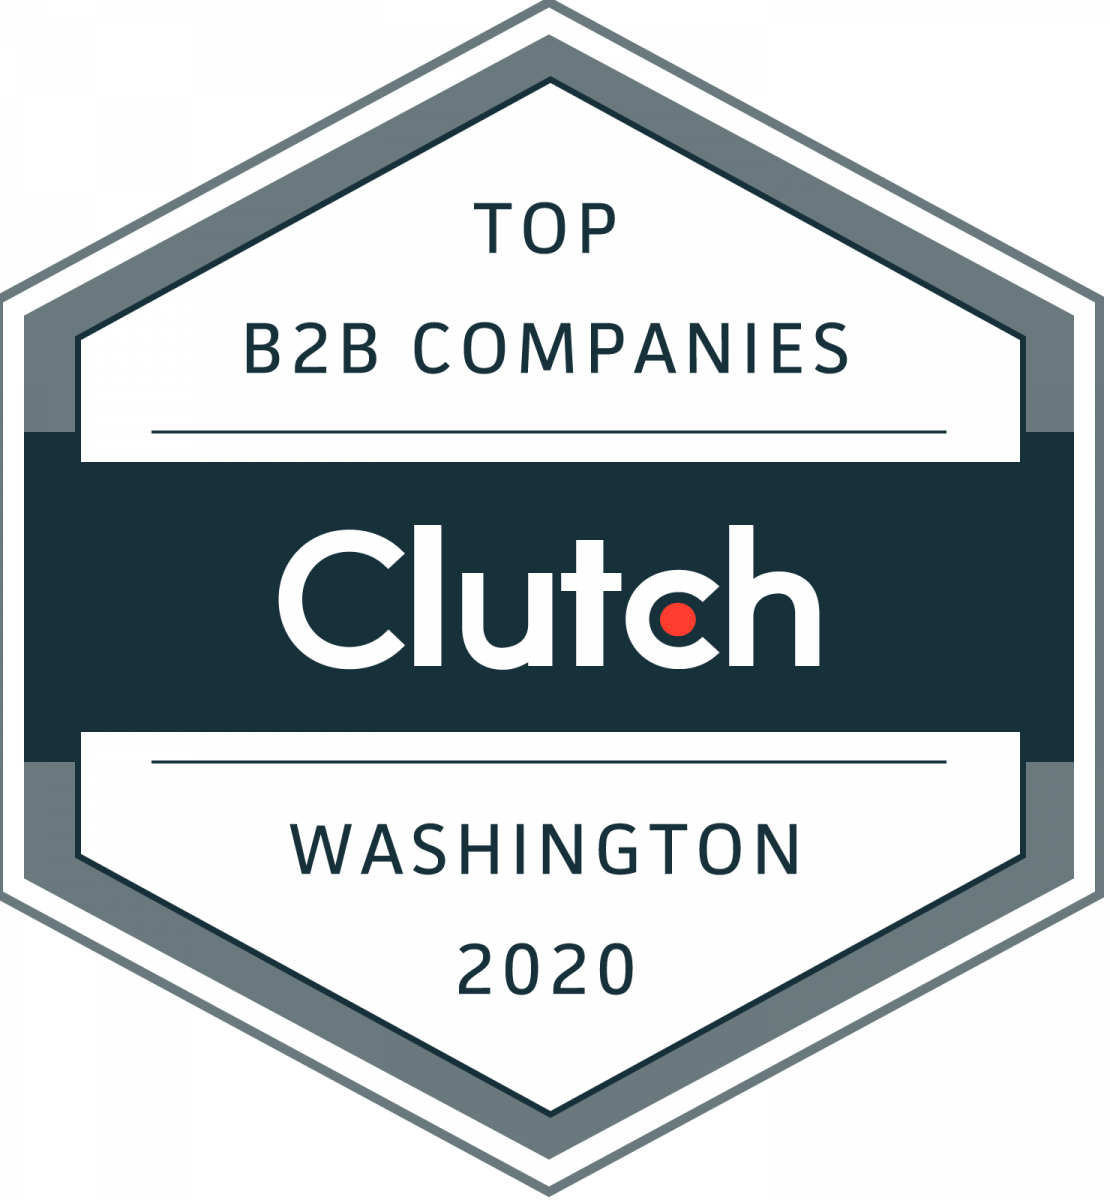 Top Washington B2B Companies